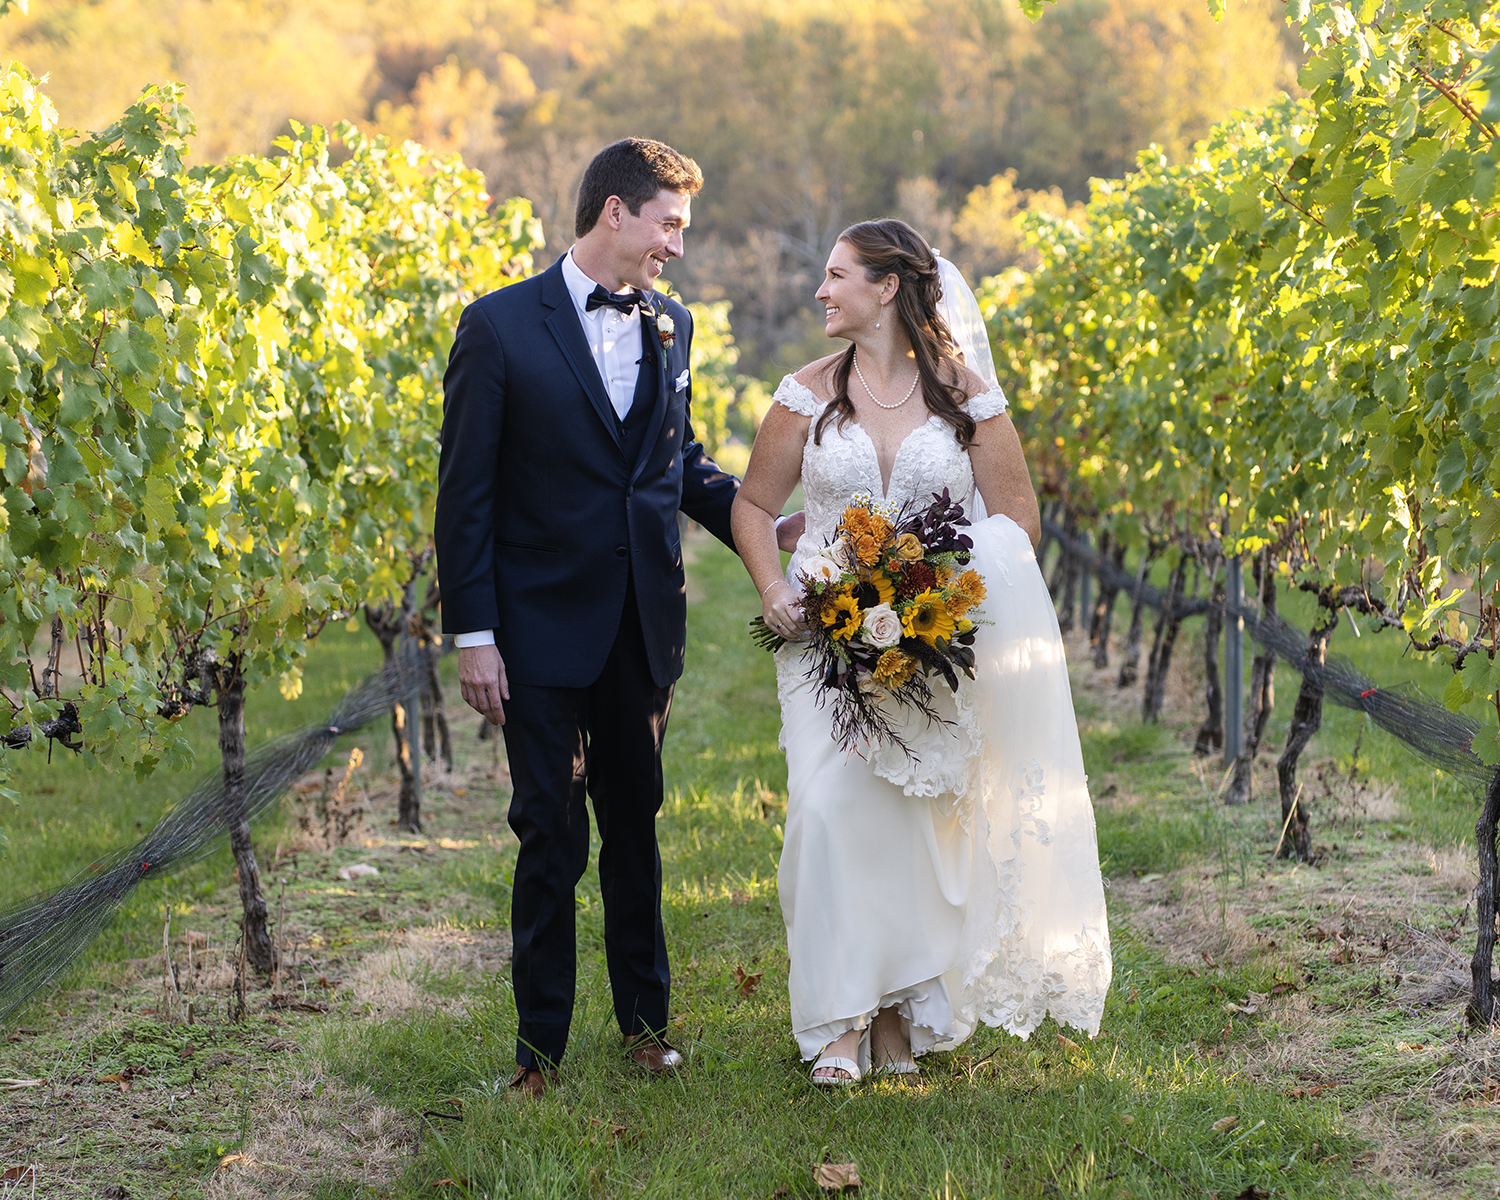 Cana Vineyards Wedding Venues Near DC